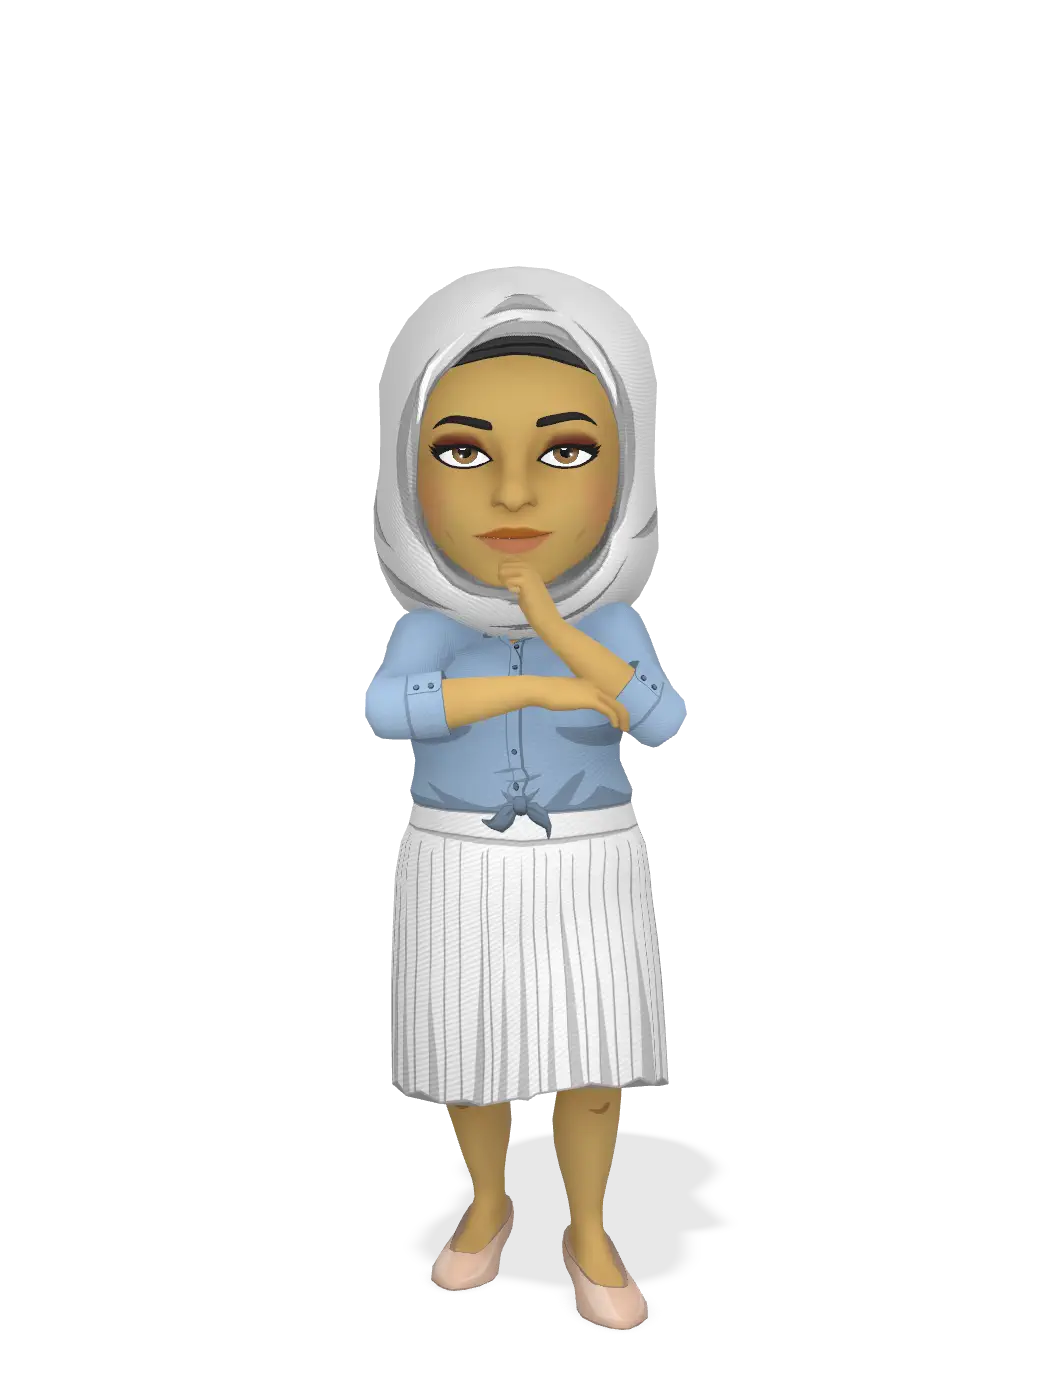 3D Bitmoji for jamilahlawry avatar